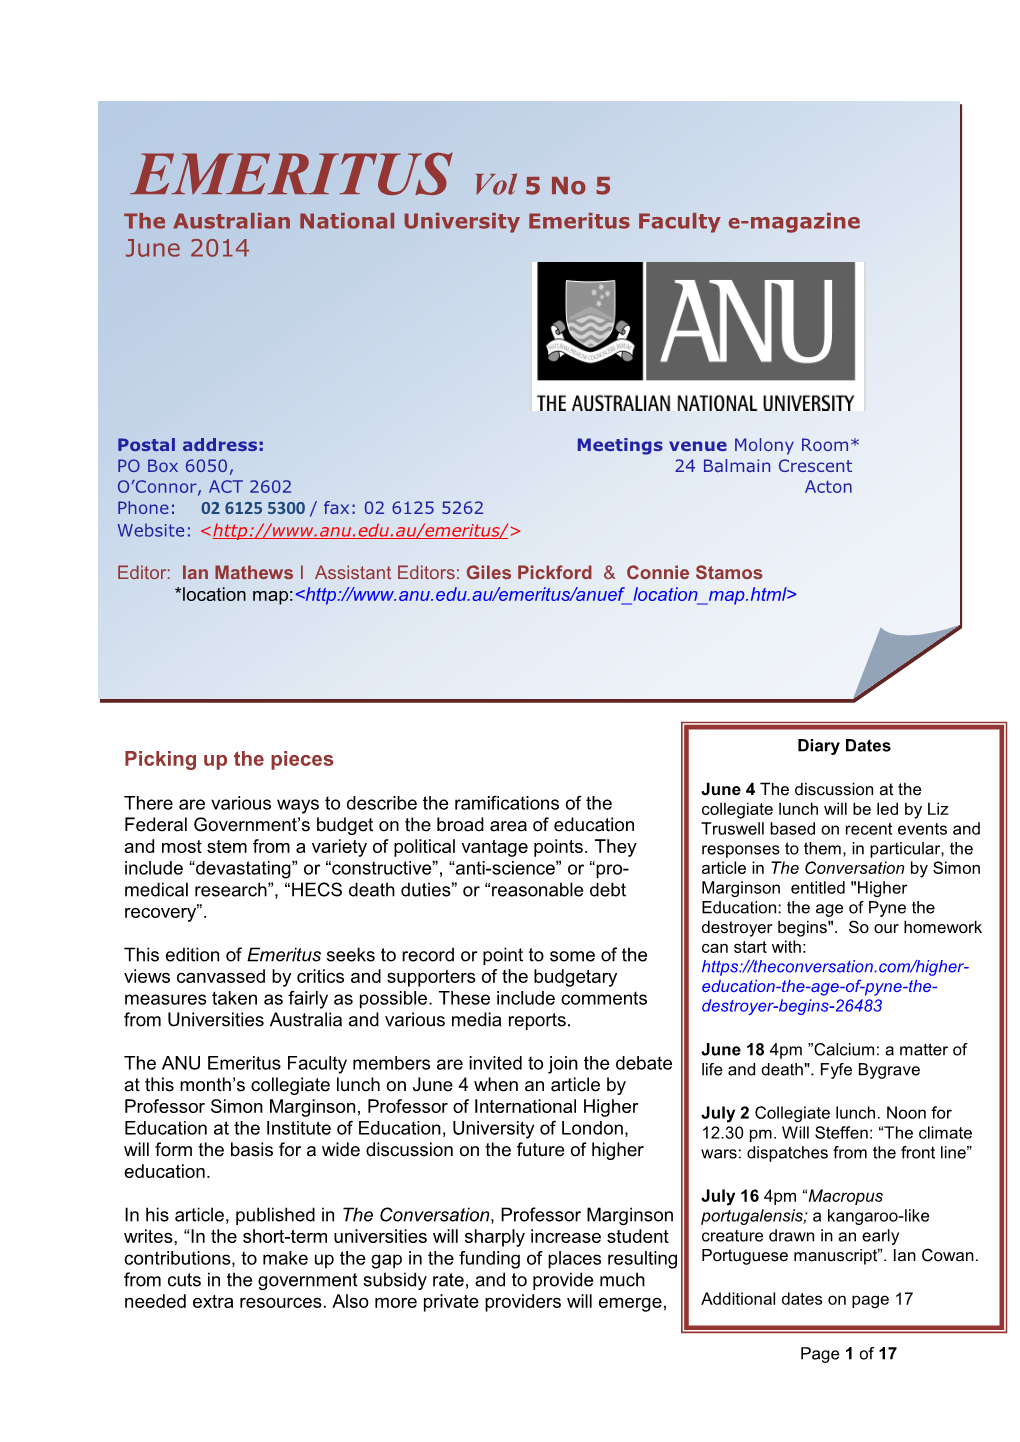 EMERITUS Vol 5 No 5 the Australian National University Emeritus Faculty E-Magazine June 2014